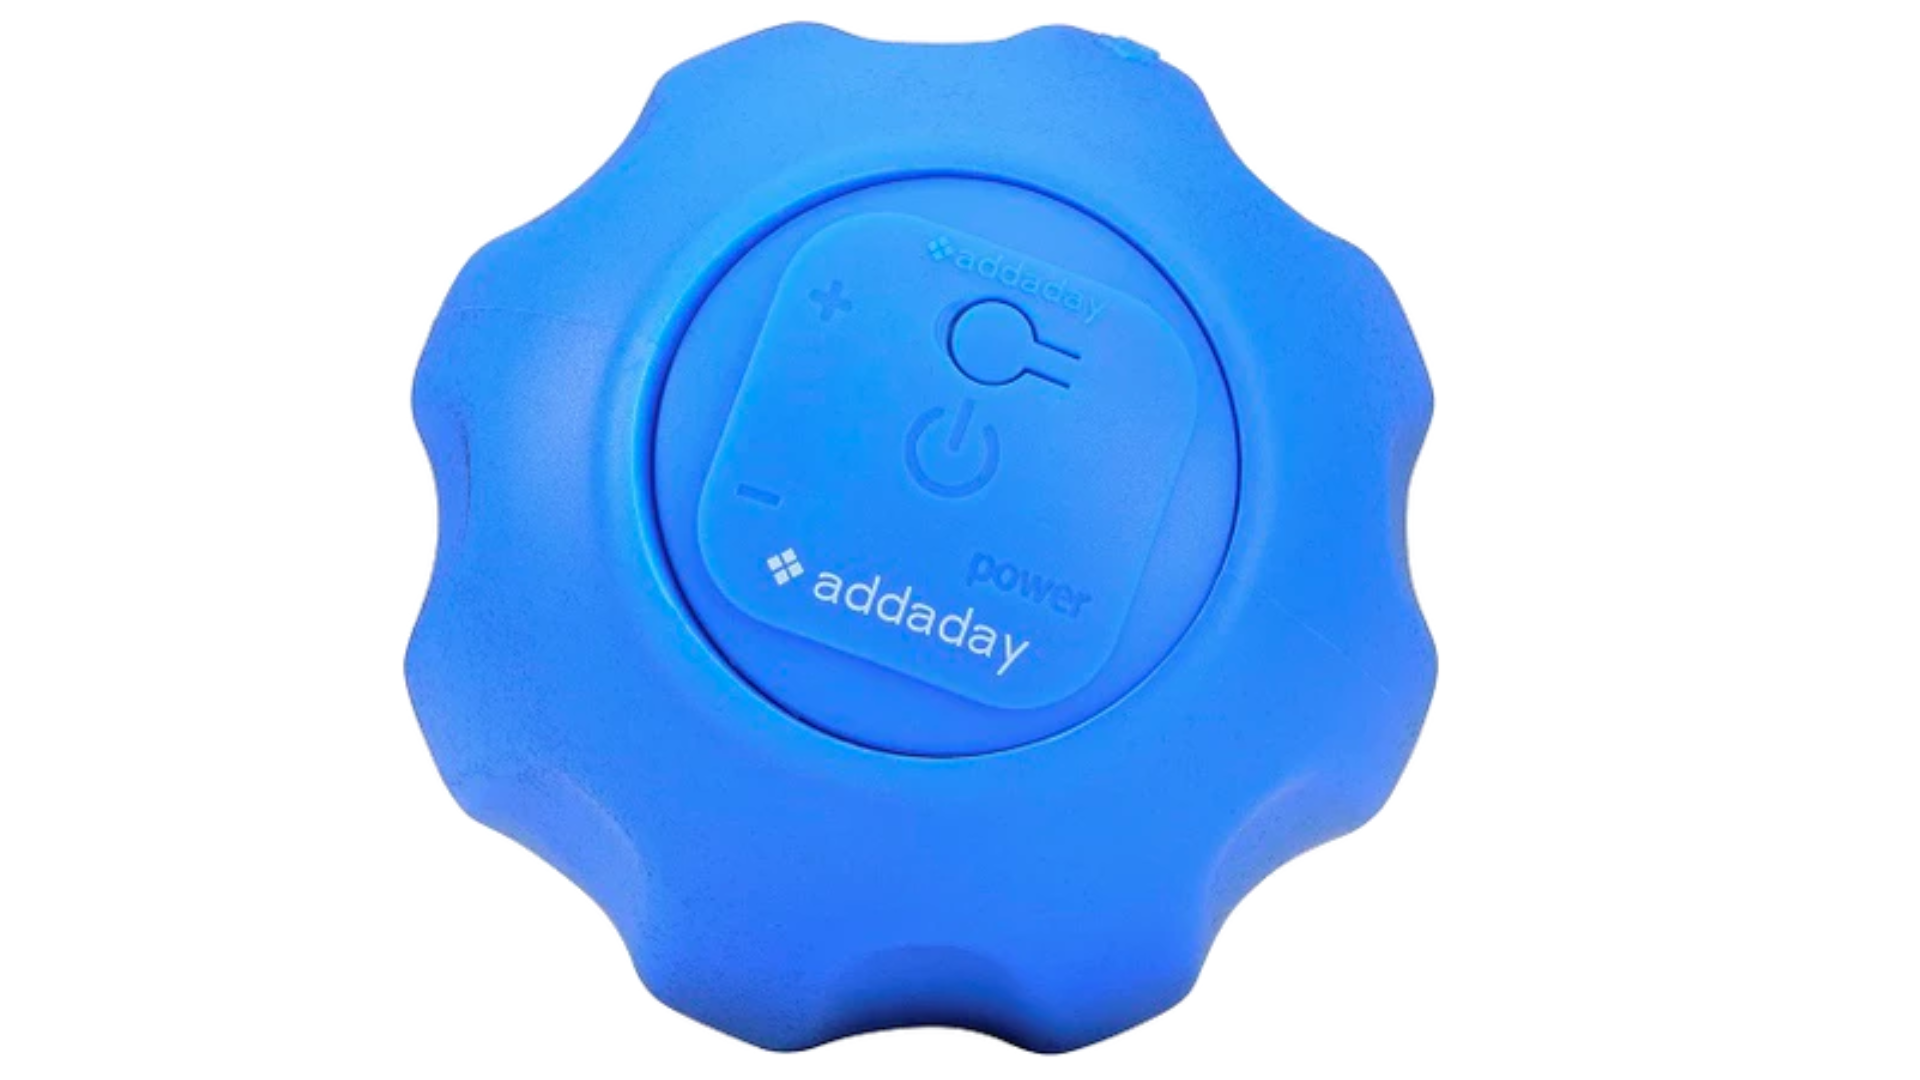 Addaday The Oscillating Sphere Bluetooth